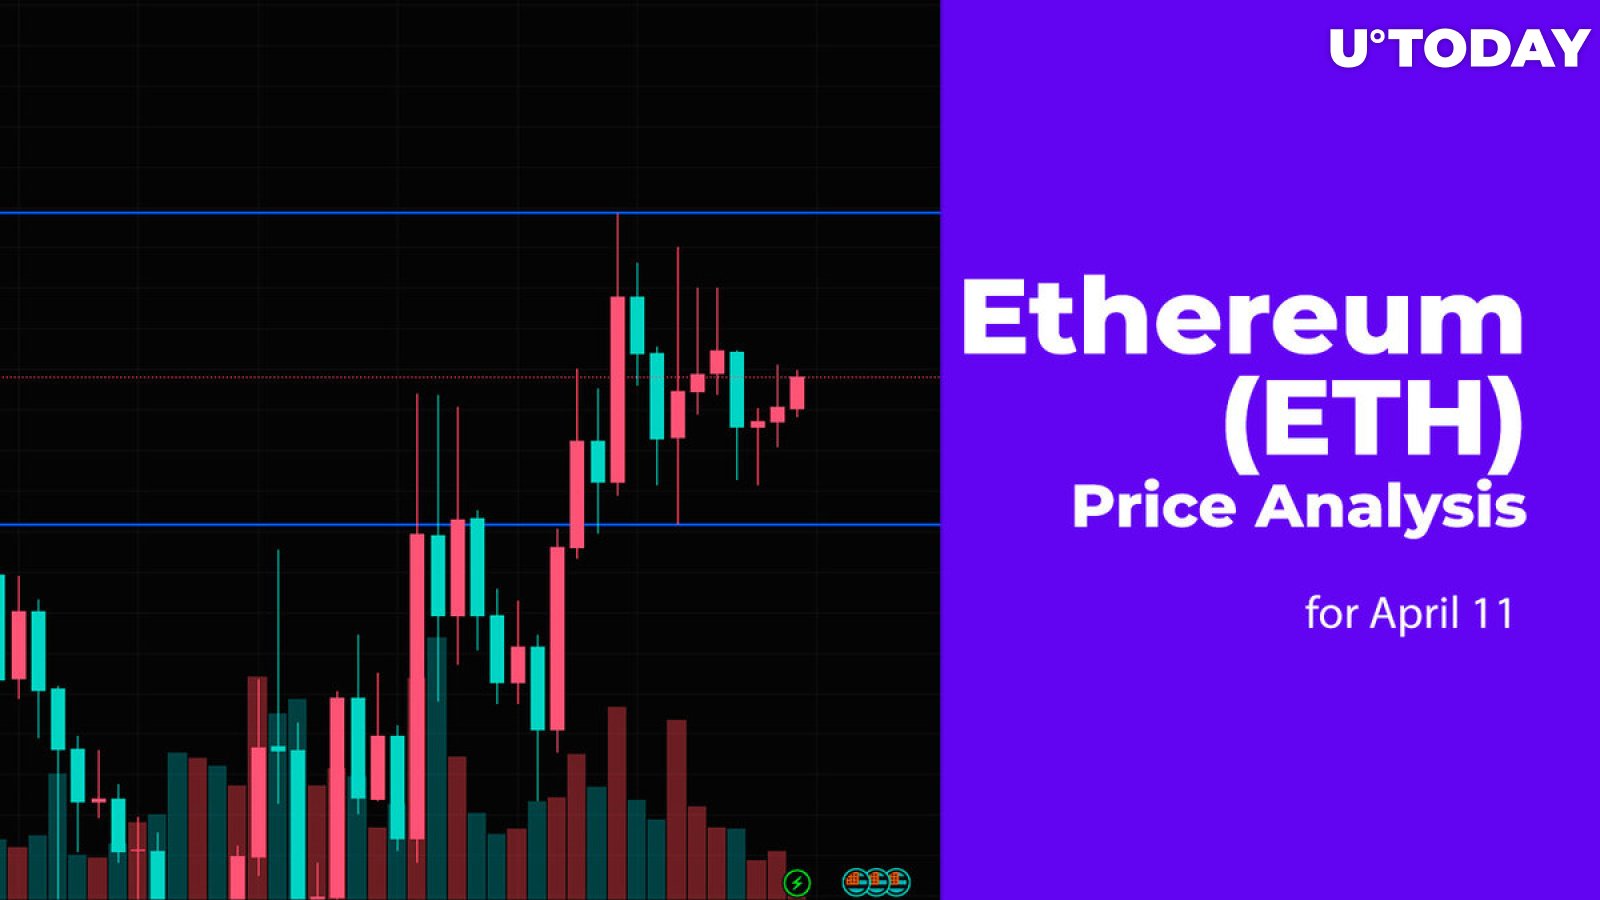 Ethereum (ETH) Price Analysis for April 11